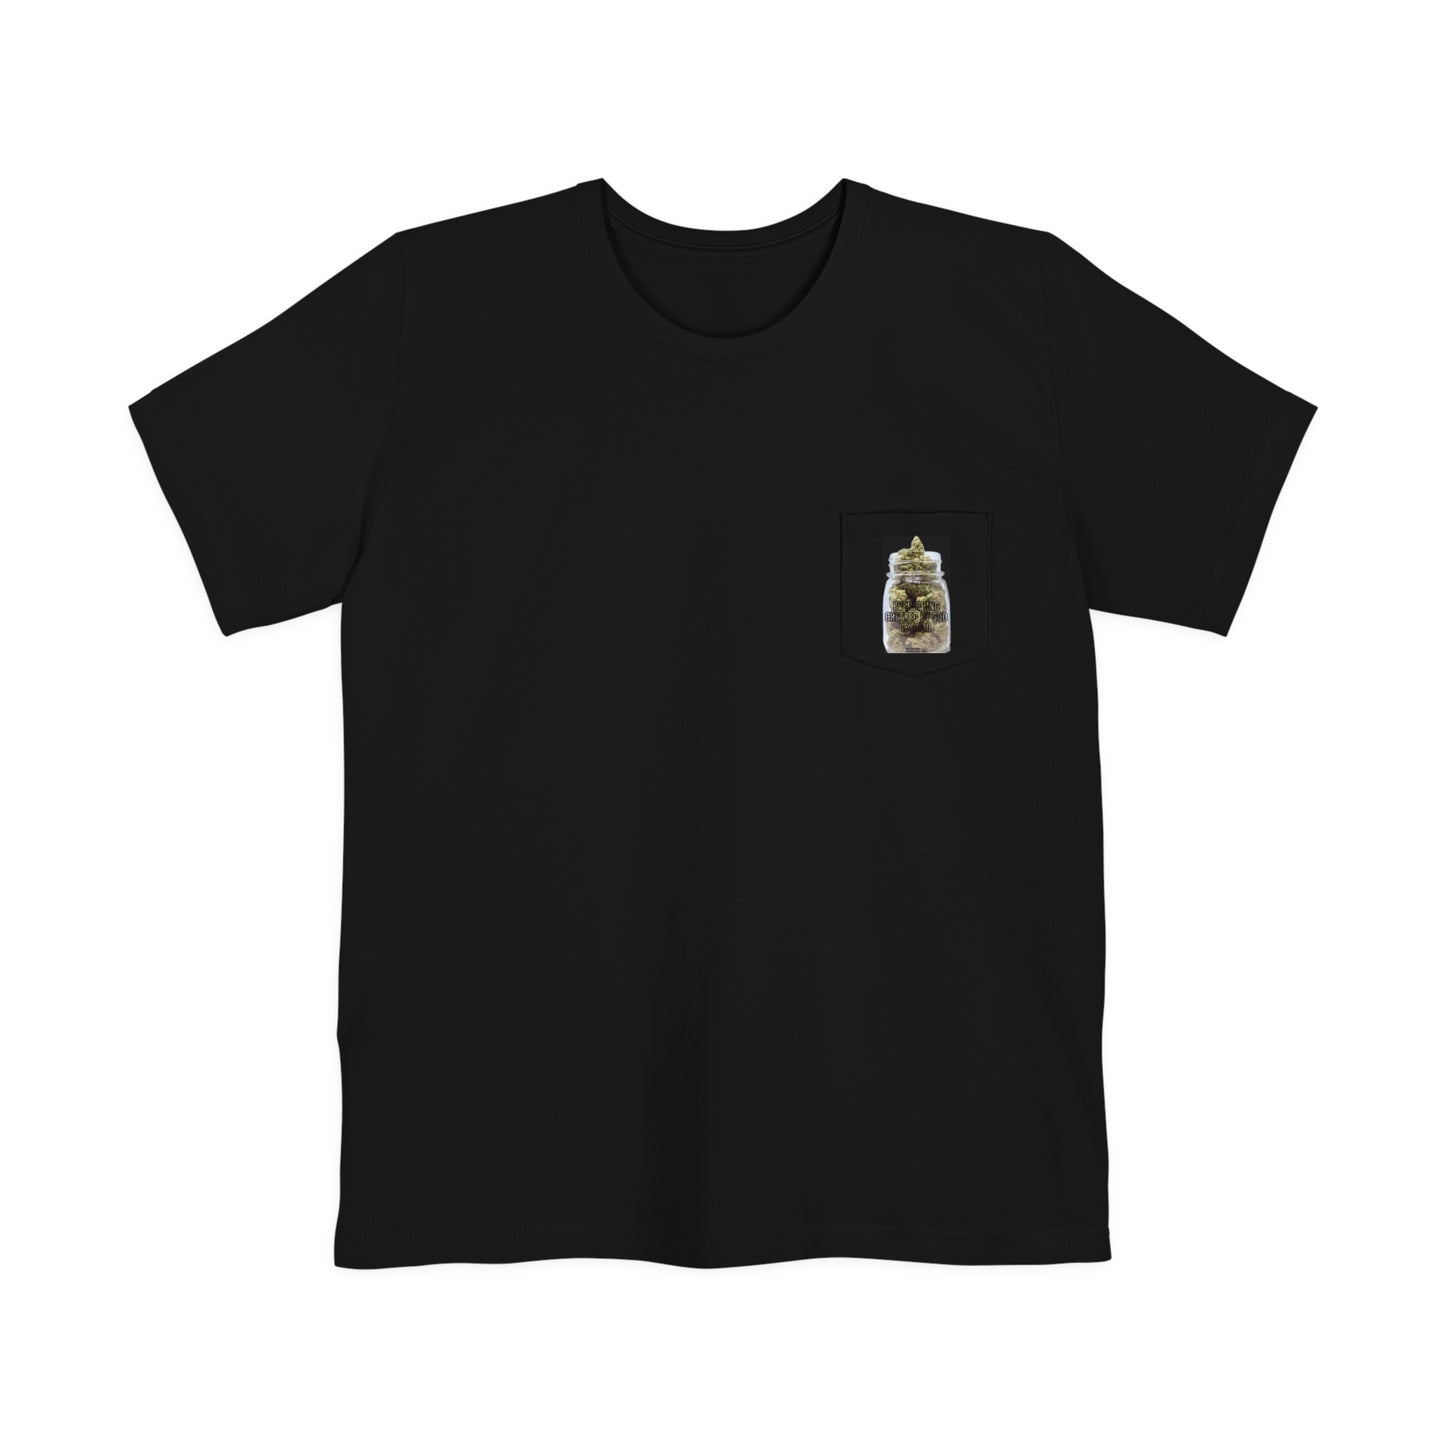 Unisex Pocket Tee, Bible Verse Shirt With Pocket, Short Sleeve T-Shirt With Pocket